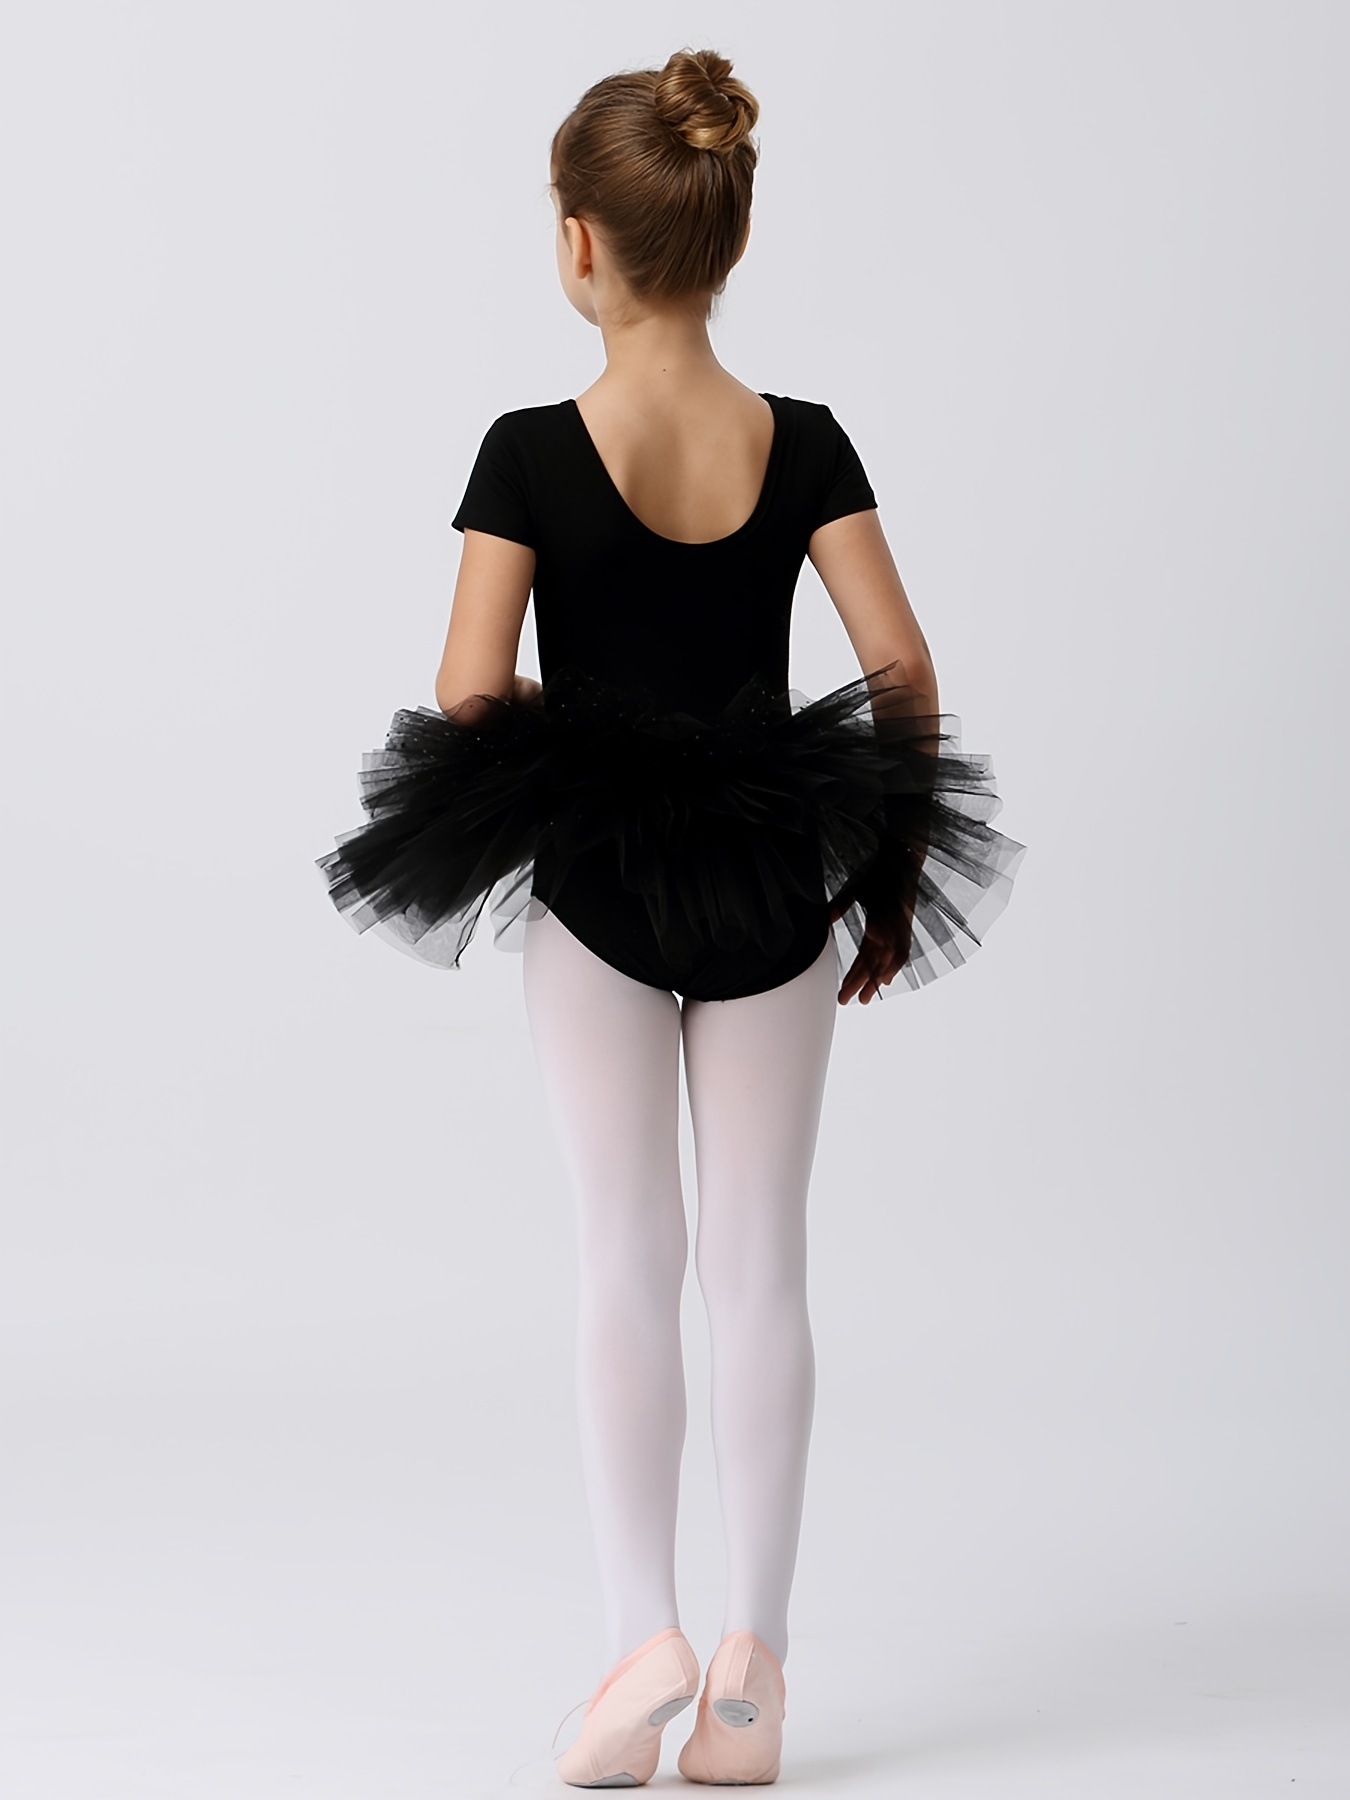 Vestido de Ballet para niñas, traje de bailarina de manga corta